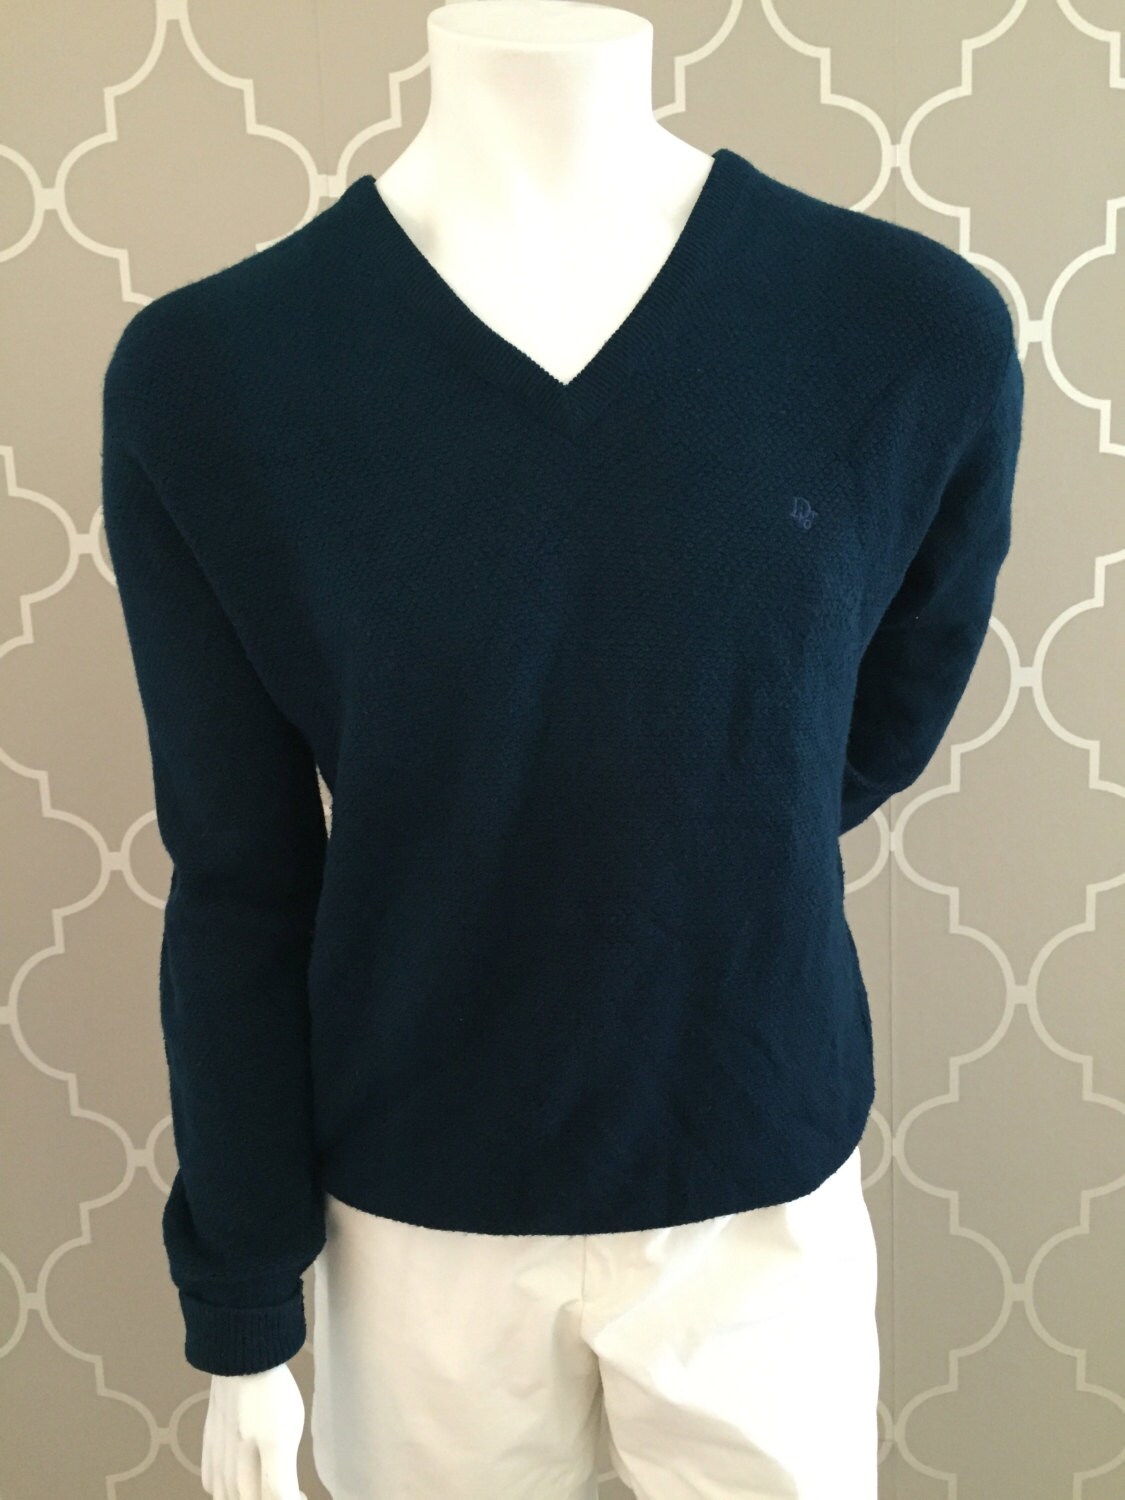 Christian Dior Sweater